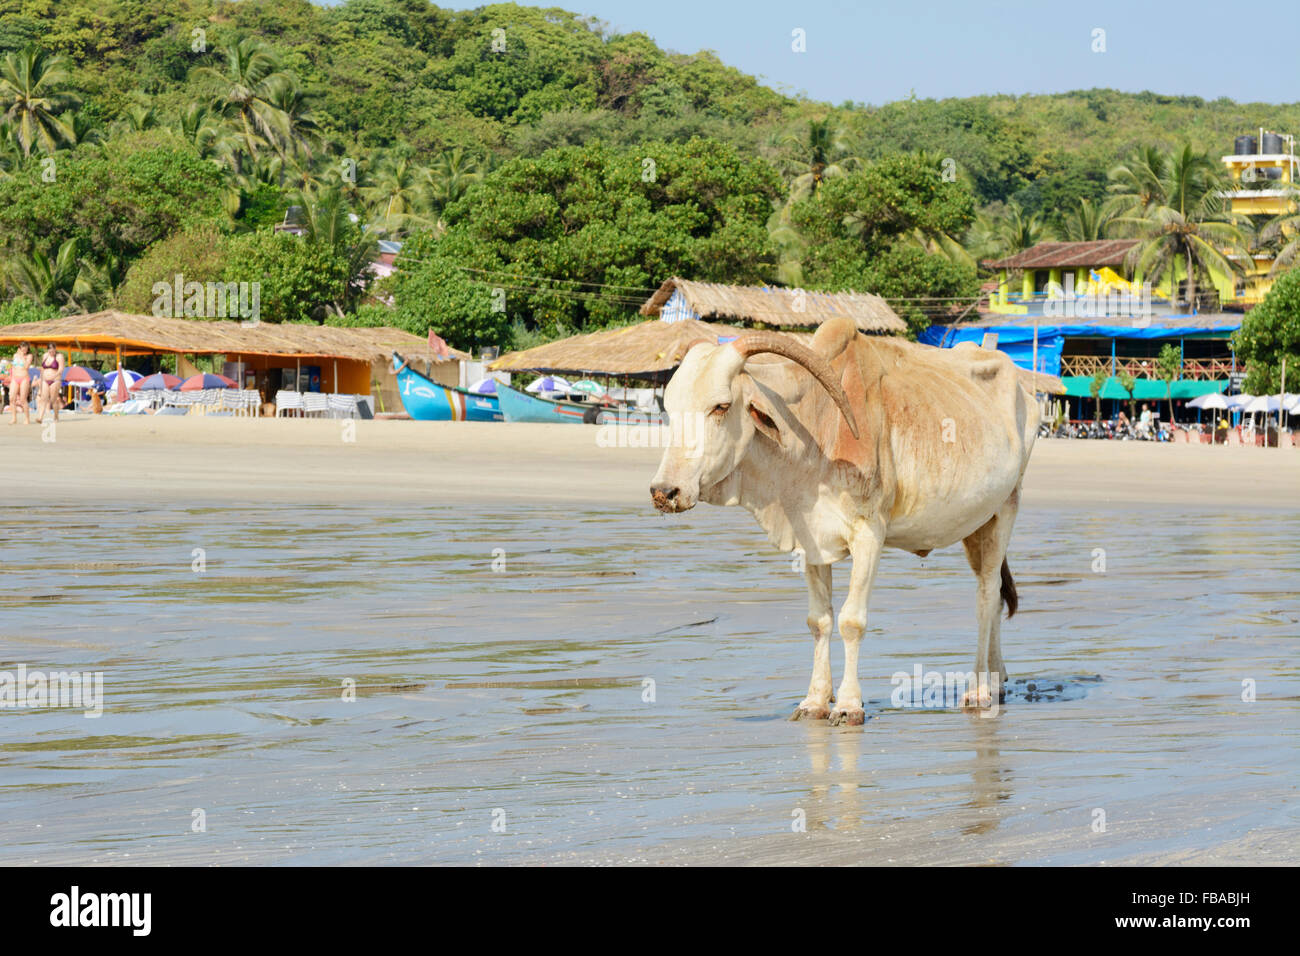 A sacred cow wanders along the shoreline on Arambol beach in North Goa, India Stock Photo